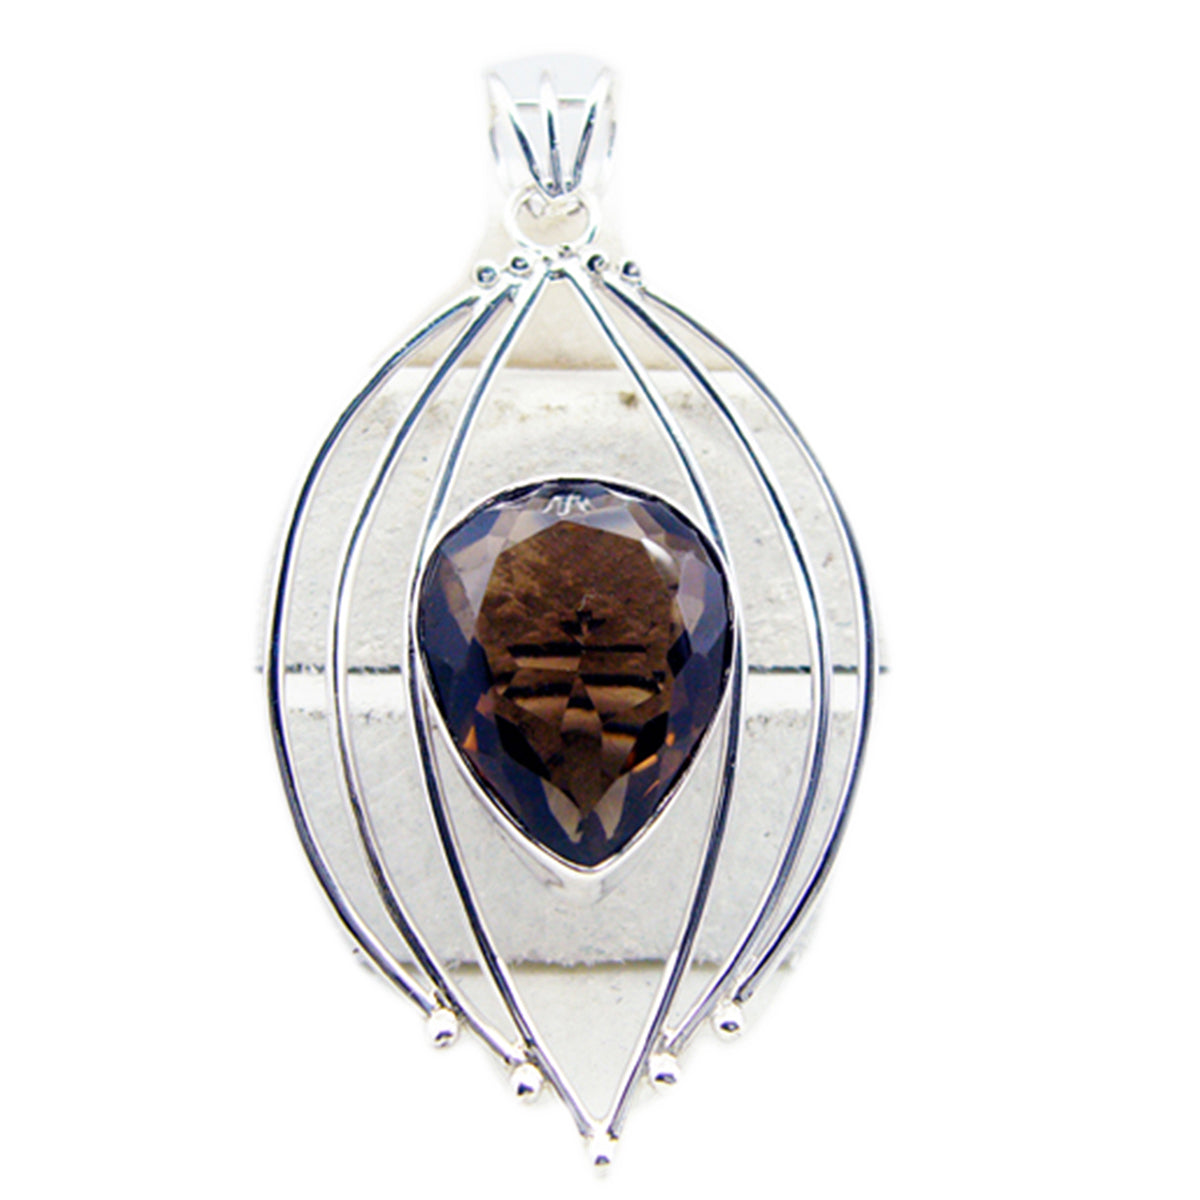 Riyo Natural Gemstone Pear Faceted Brown smoky quartz 925 Silver Pendants gift for mom